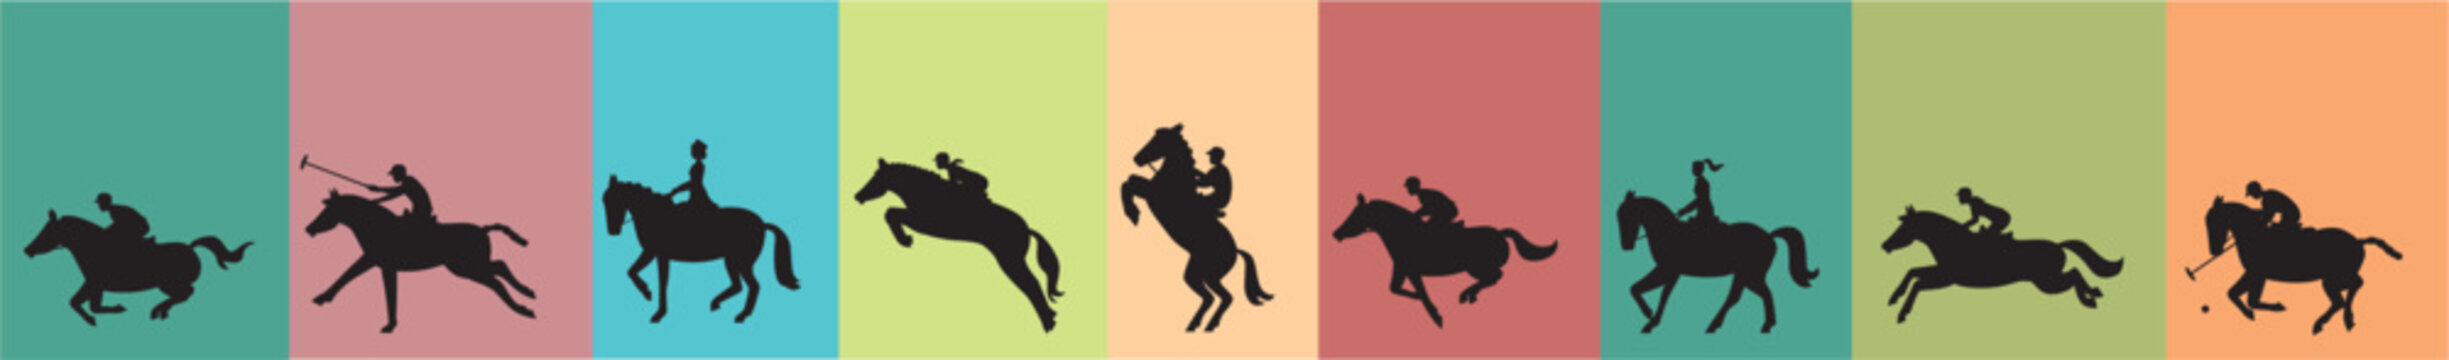 horse riders silhouette